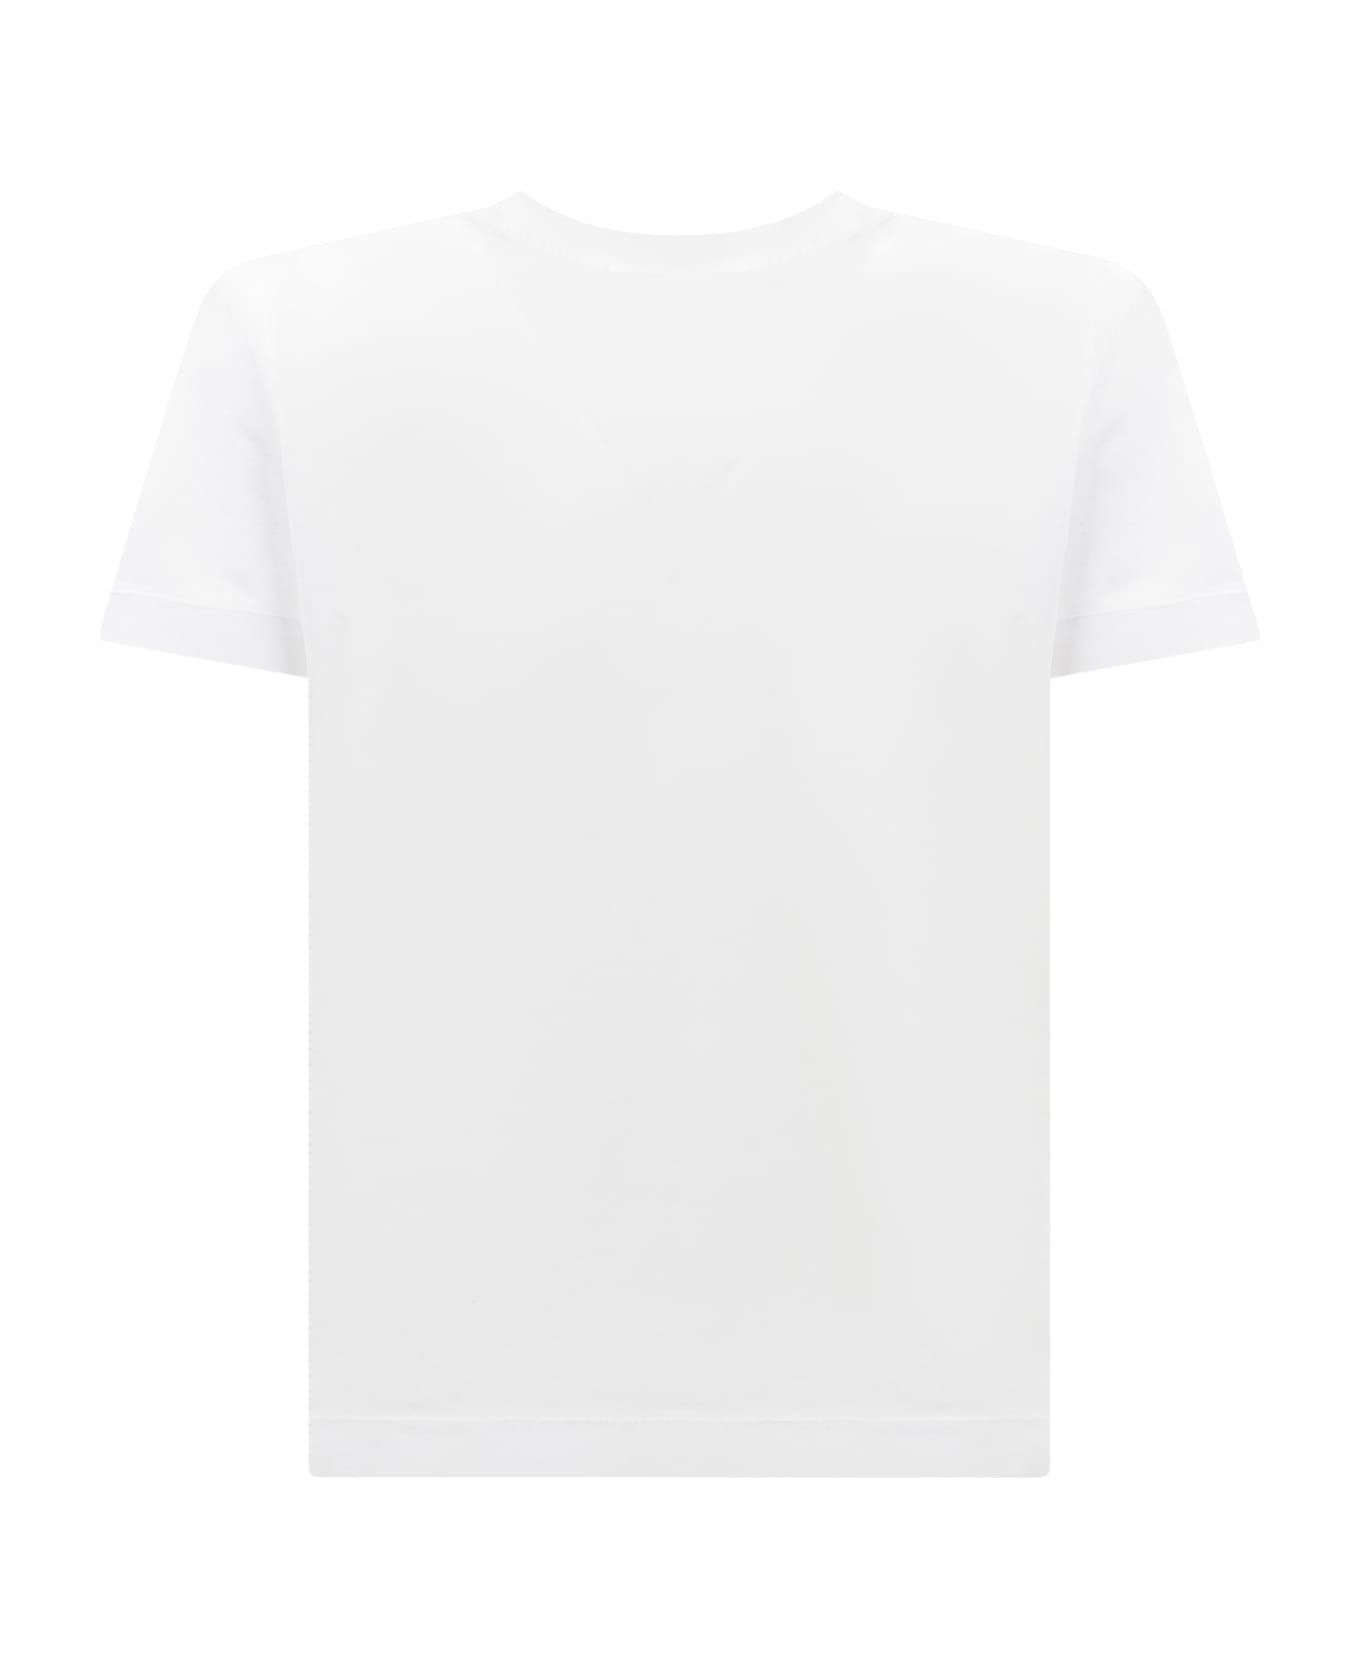 Stone Island Junior T-shirt With Logo - WHITE